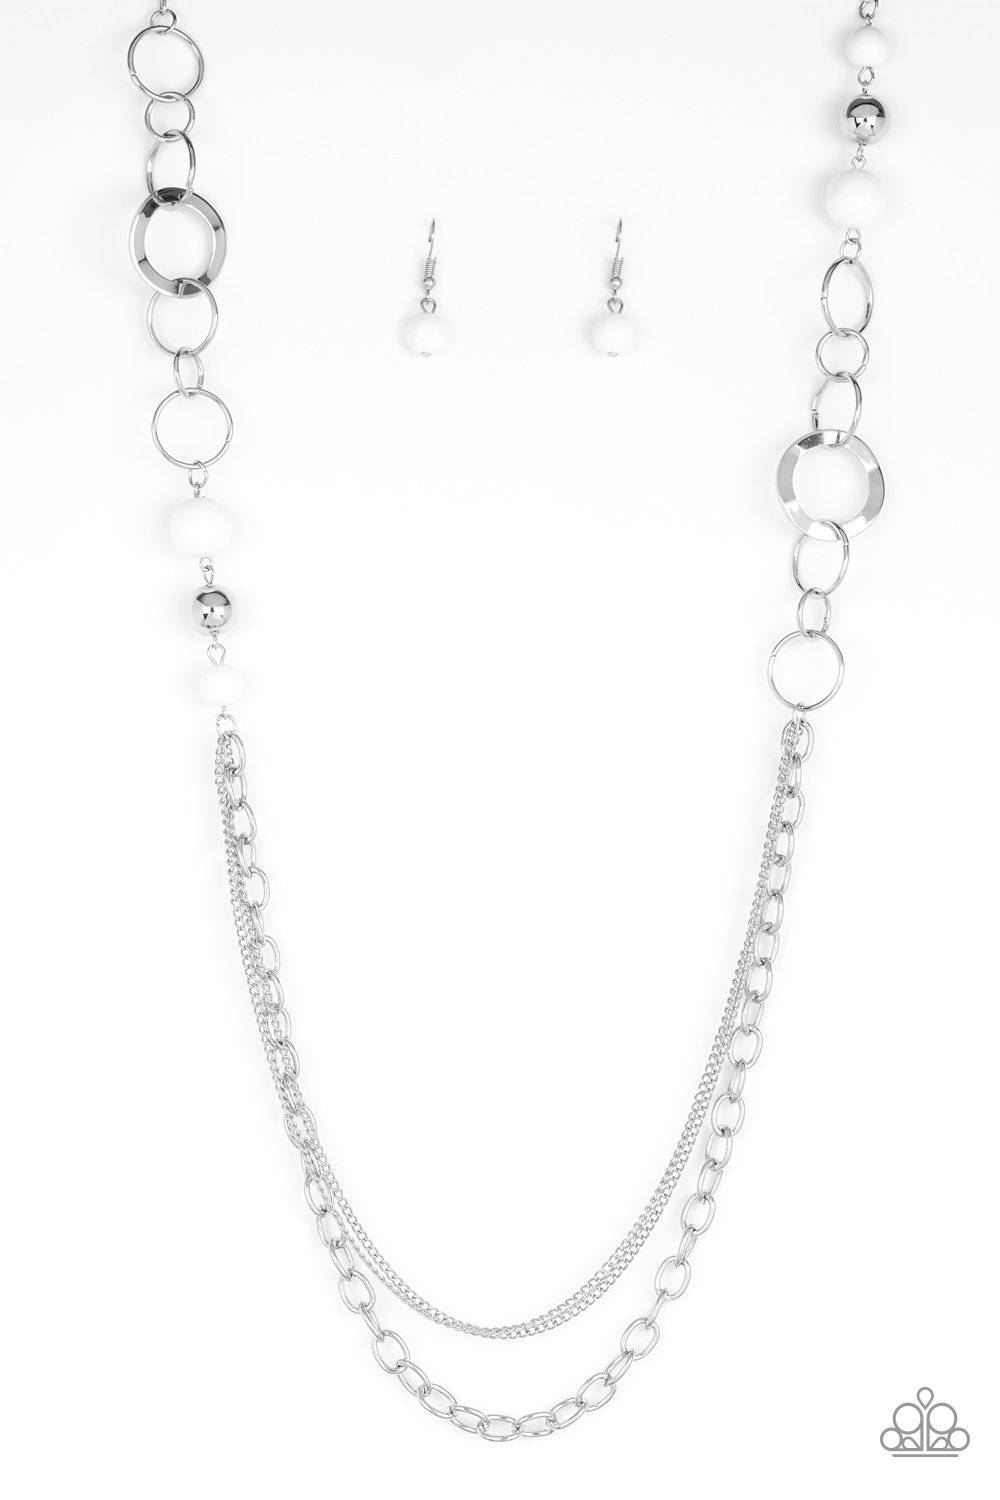 Modern Motley - White Bead Necklace - Paparazzi Accessories - GlaMarous Titi Jewels